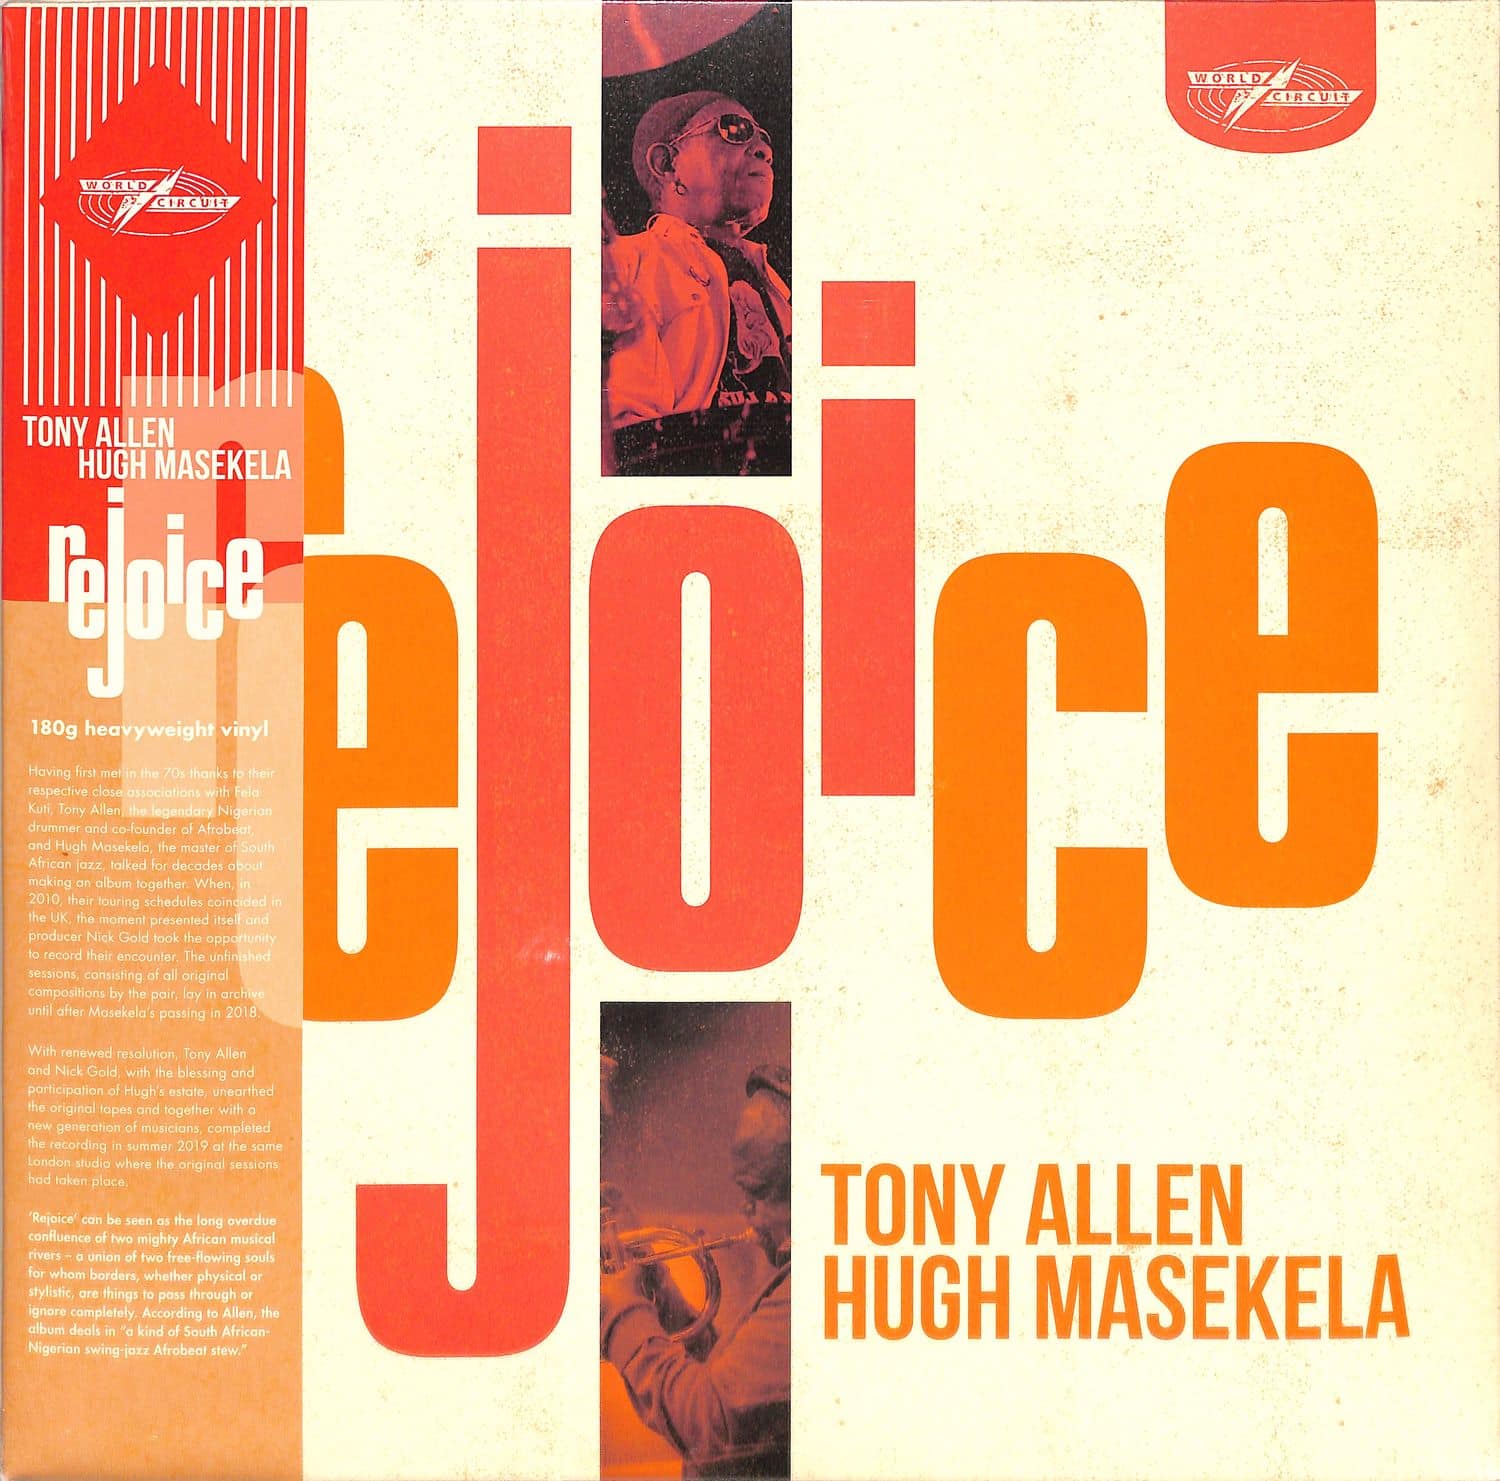 Tony Allen & Hugh Masekala - REJOICE 